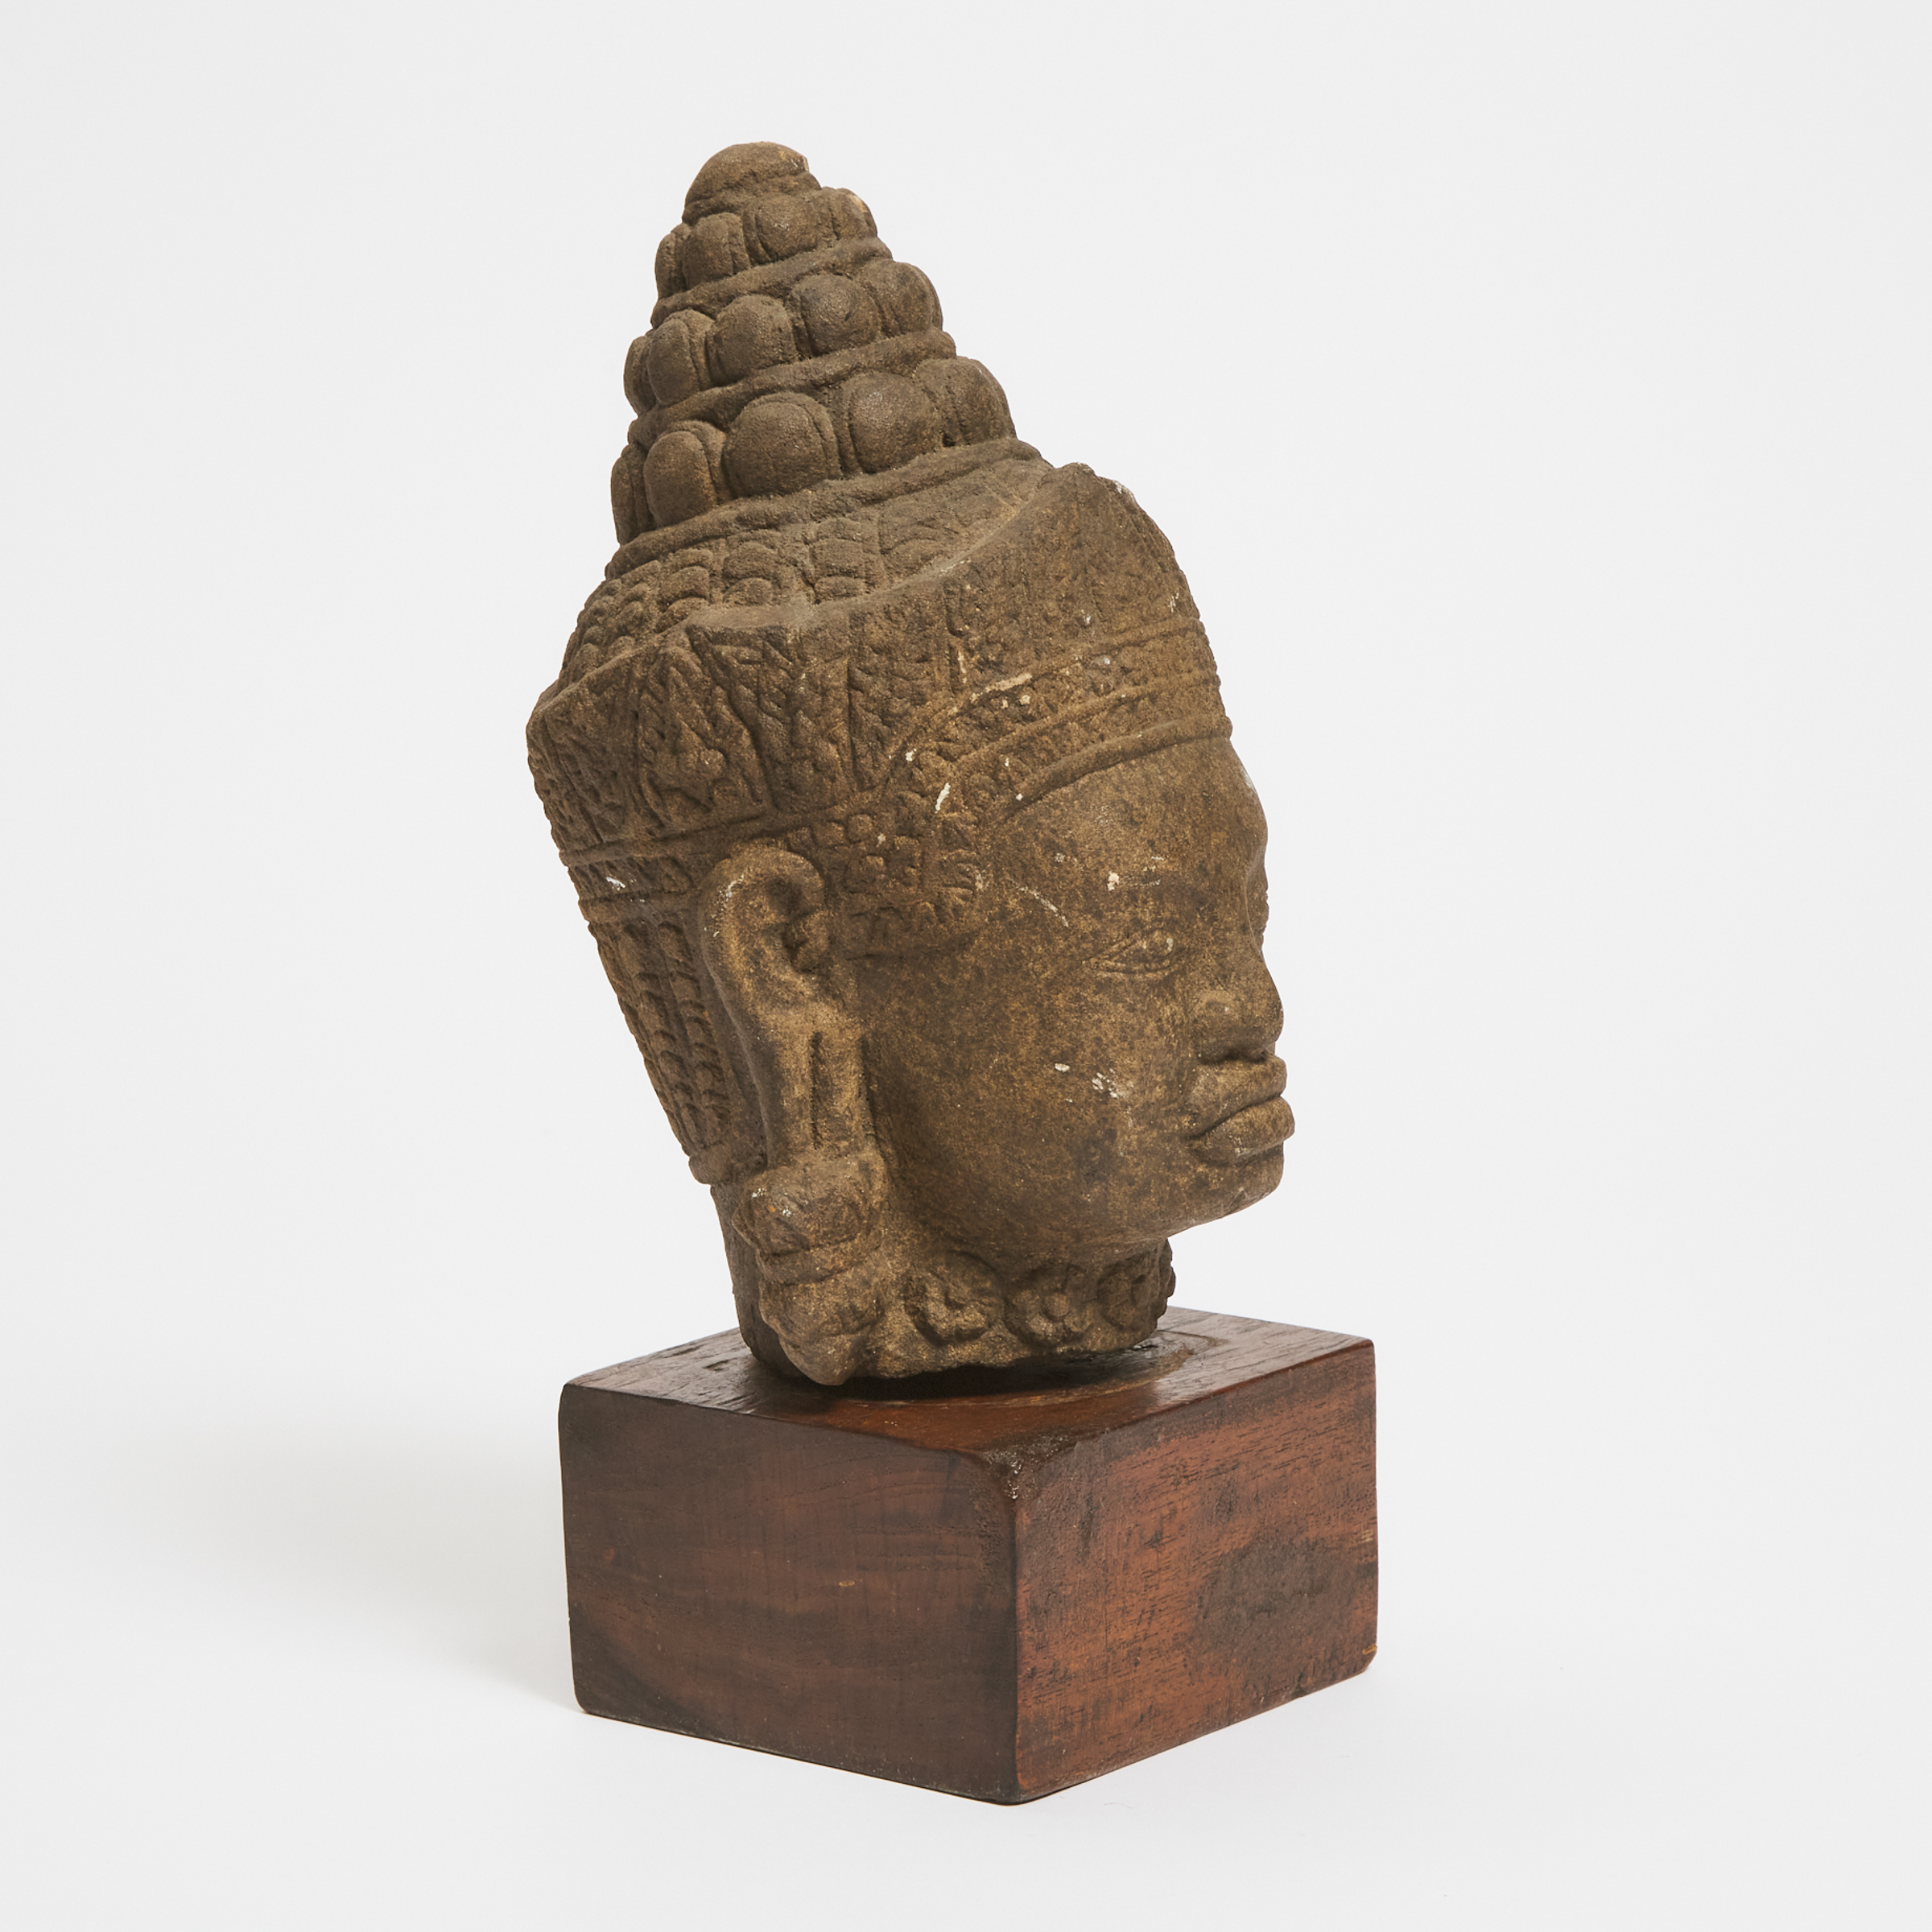 A Khmer Stone Head of Buddha, 14th Century